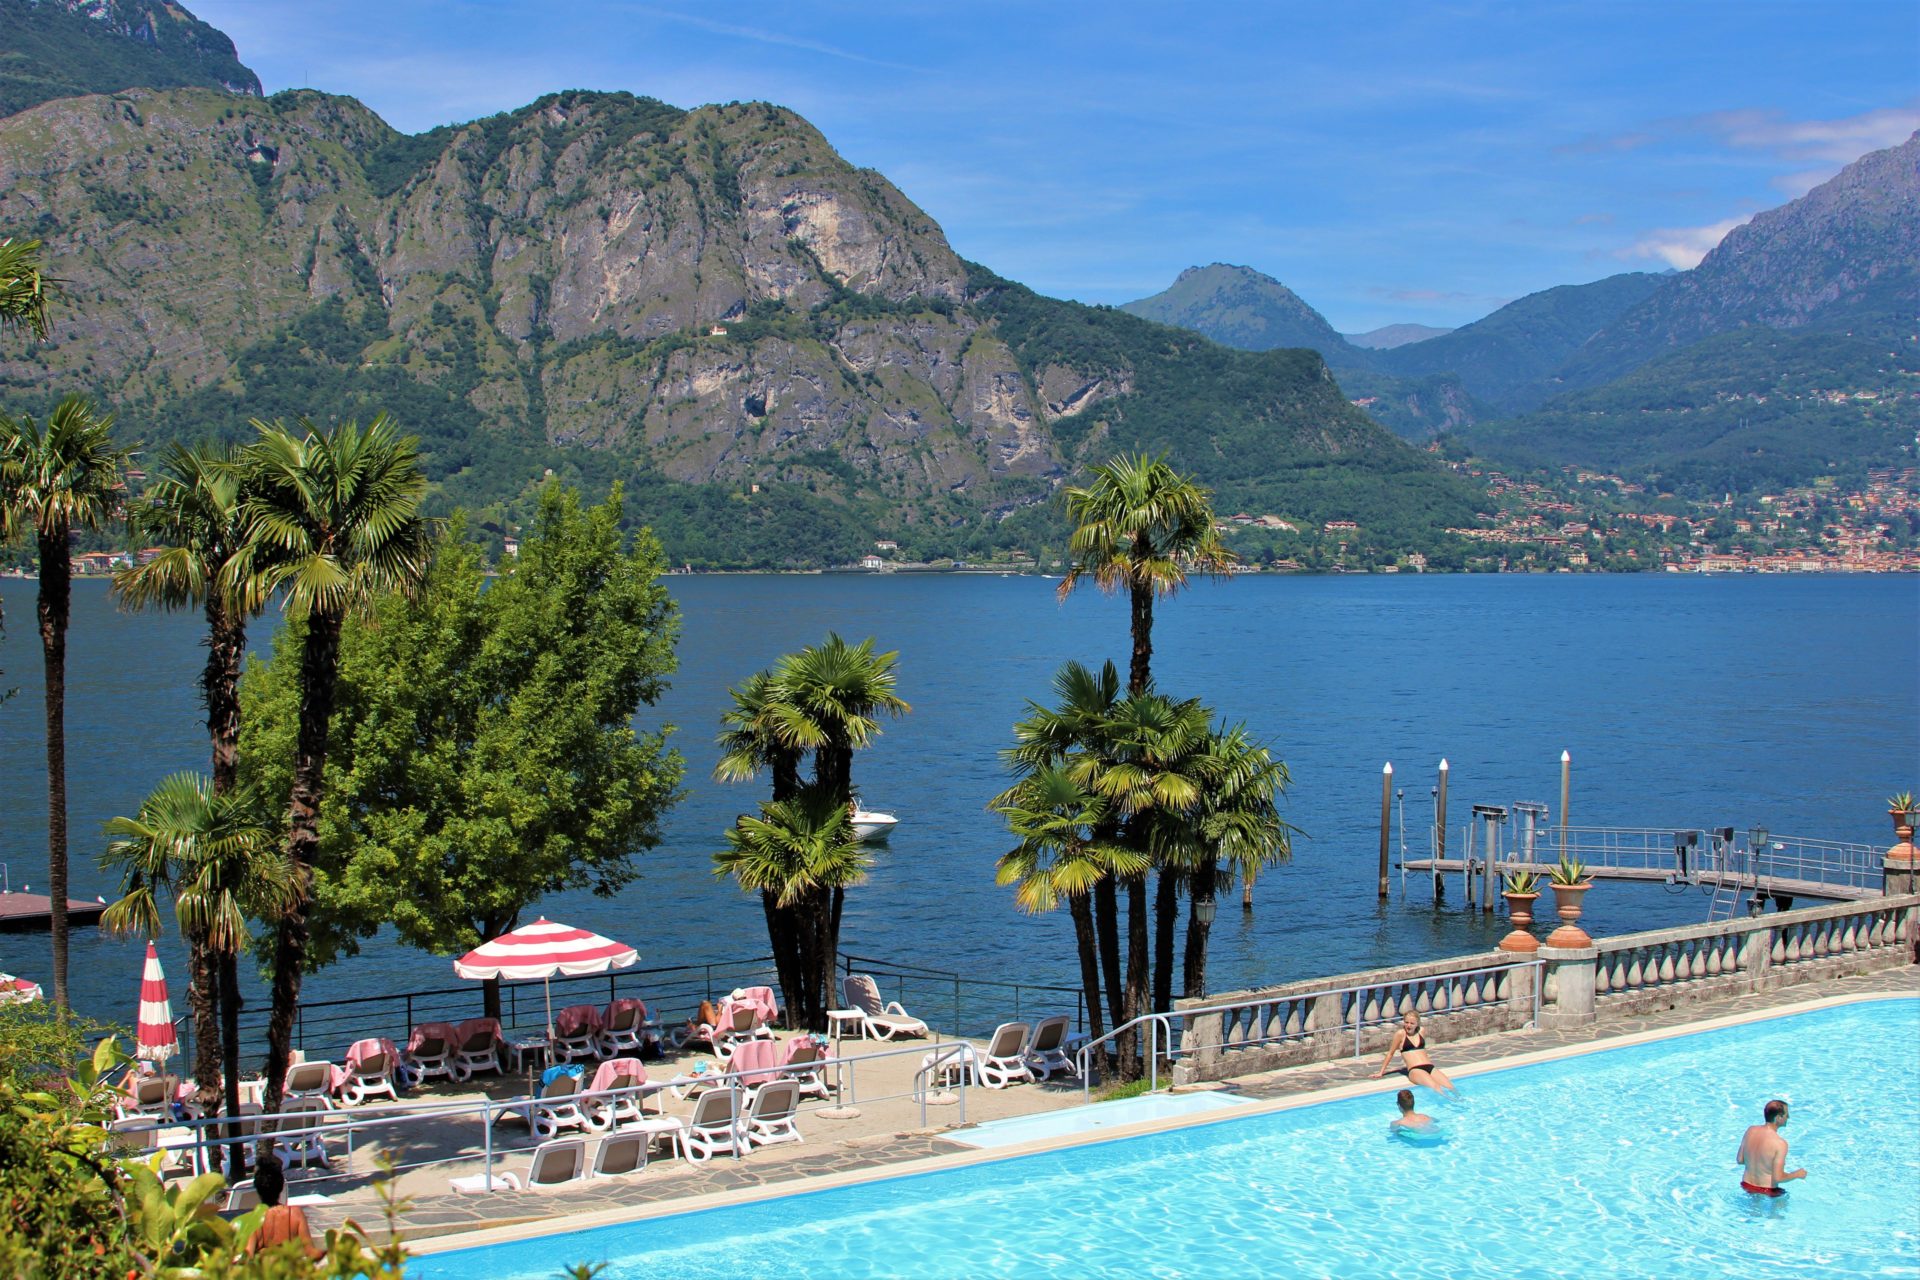 grand hotel villa serbelloni sun terrace and pool gilly pickup